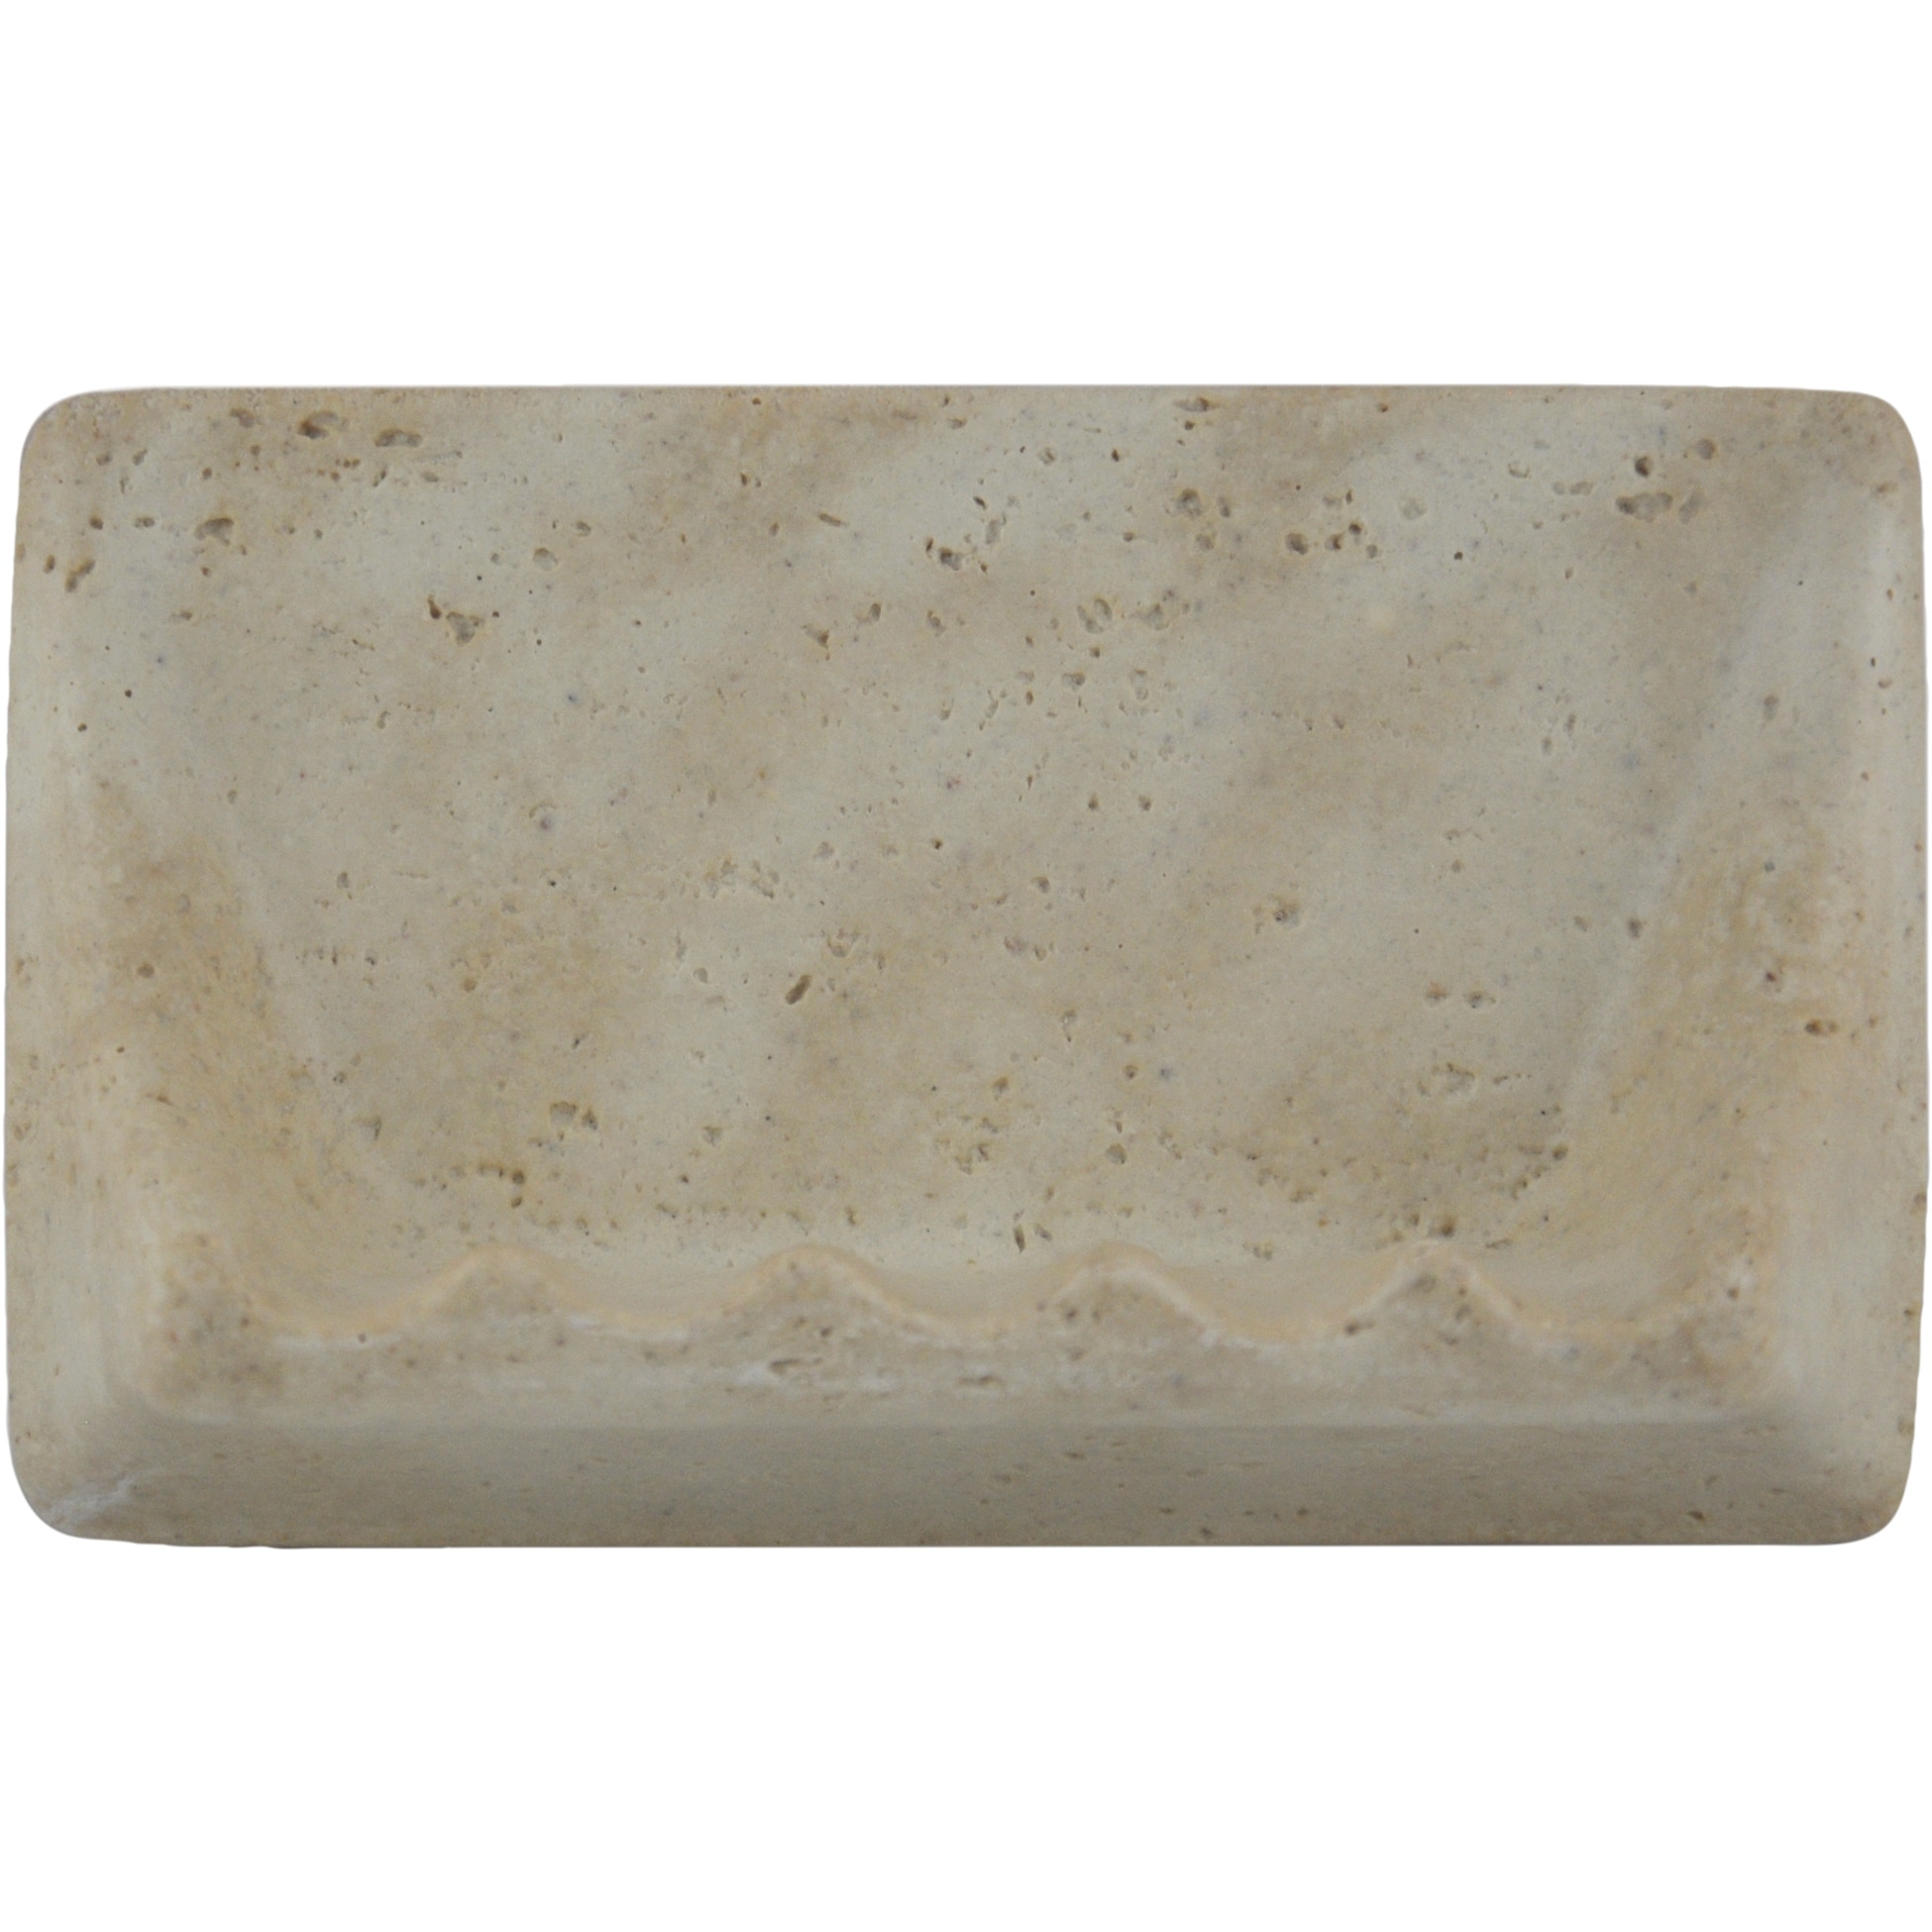 Squarefeet Depot Premium Quality Classic Light Travertine Resin Soap Dish Holder